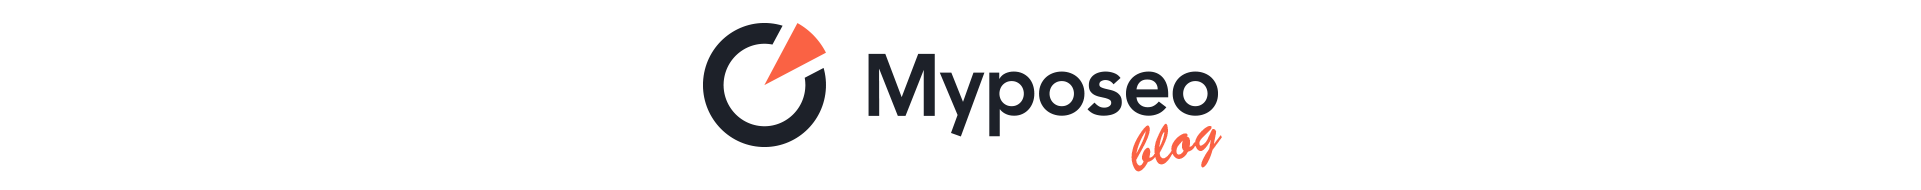 Myposeo blog